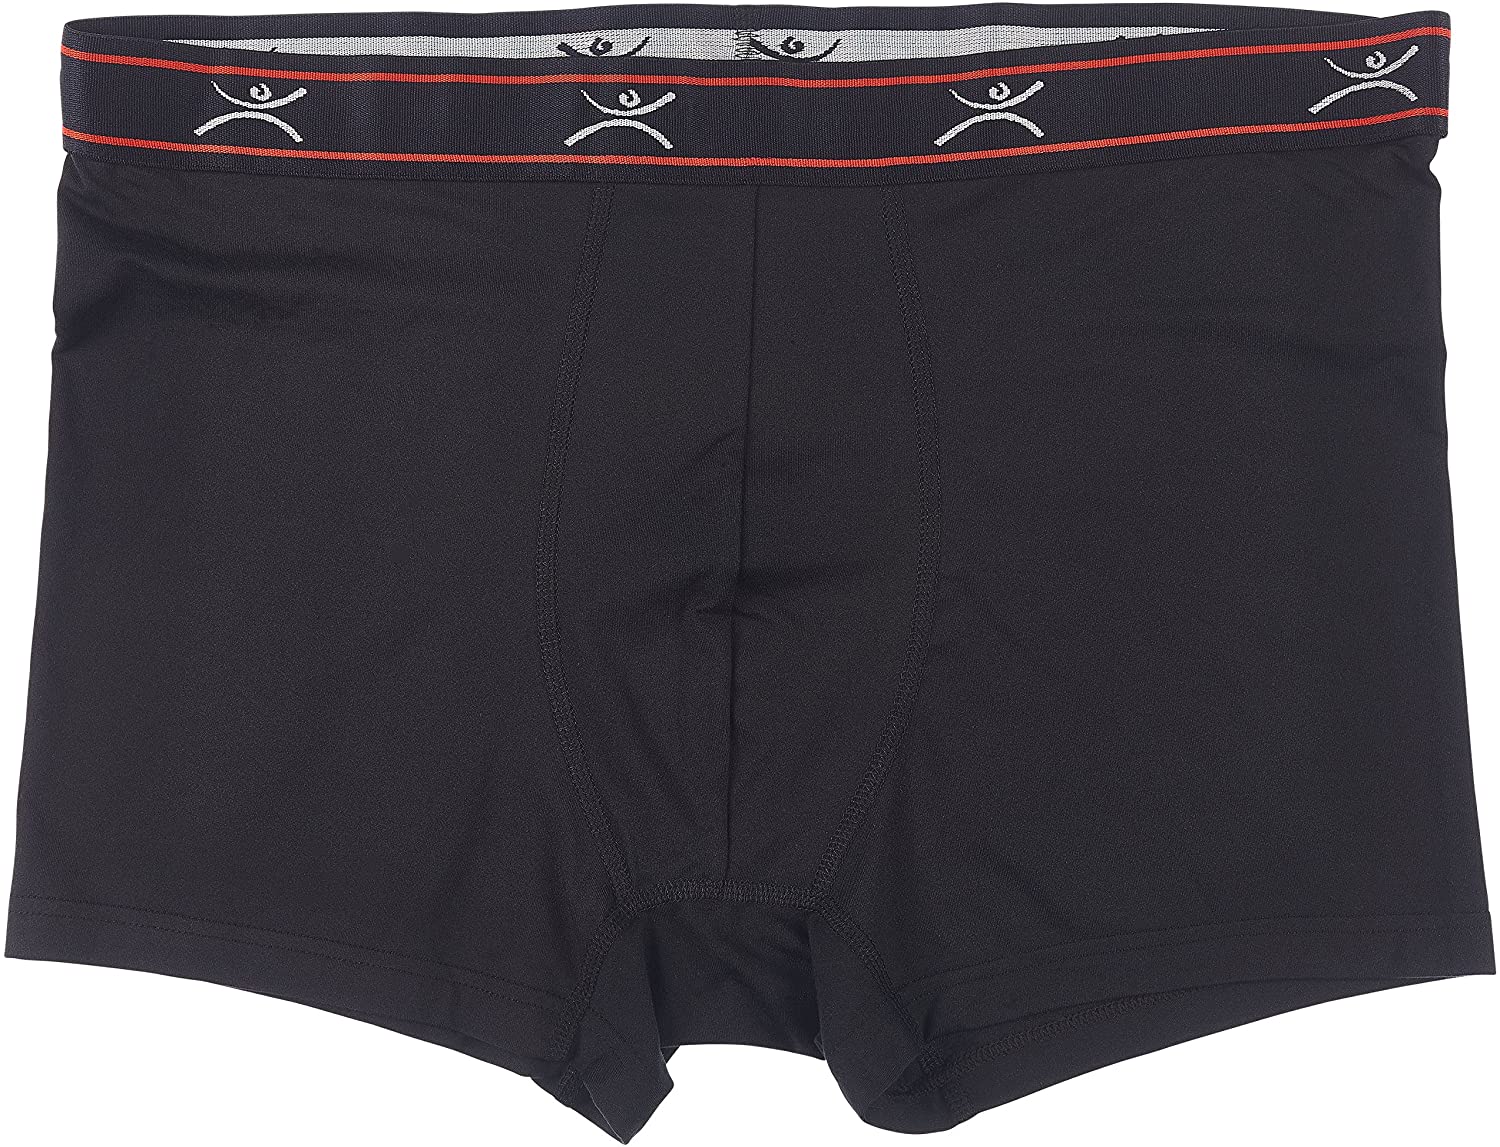 Terramar Mens Silkskins 3 Trunk Briefs Underwear with Pouch Pack of 3 